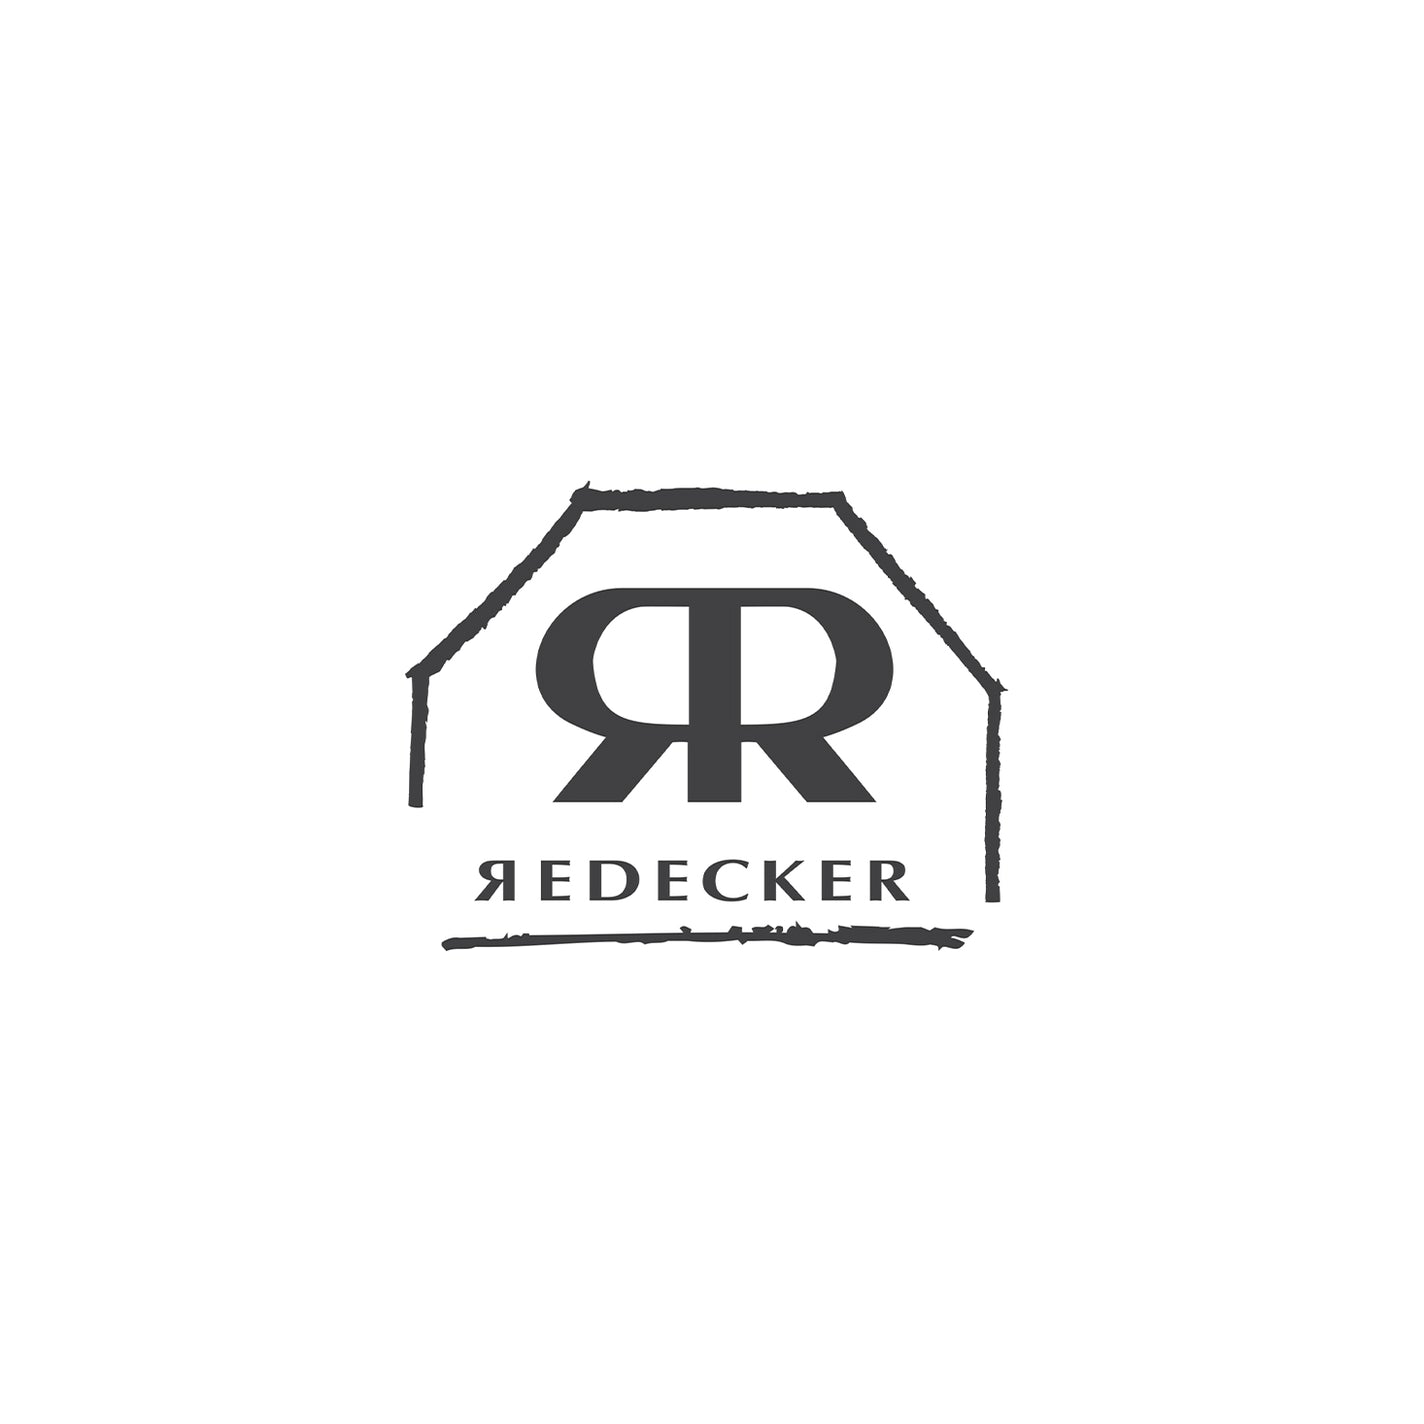 Redecker Nutcracker - Beechwood Handle